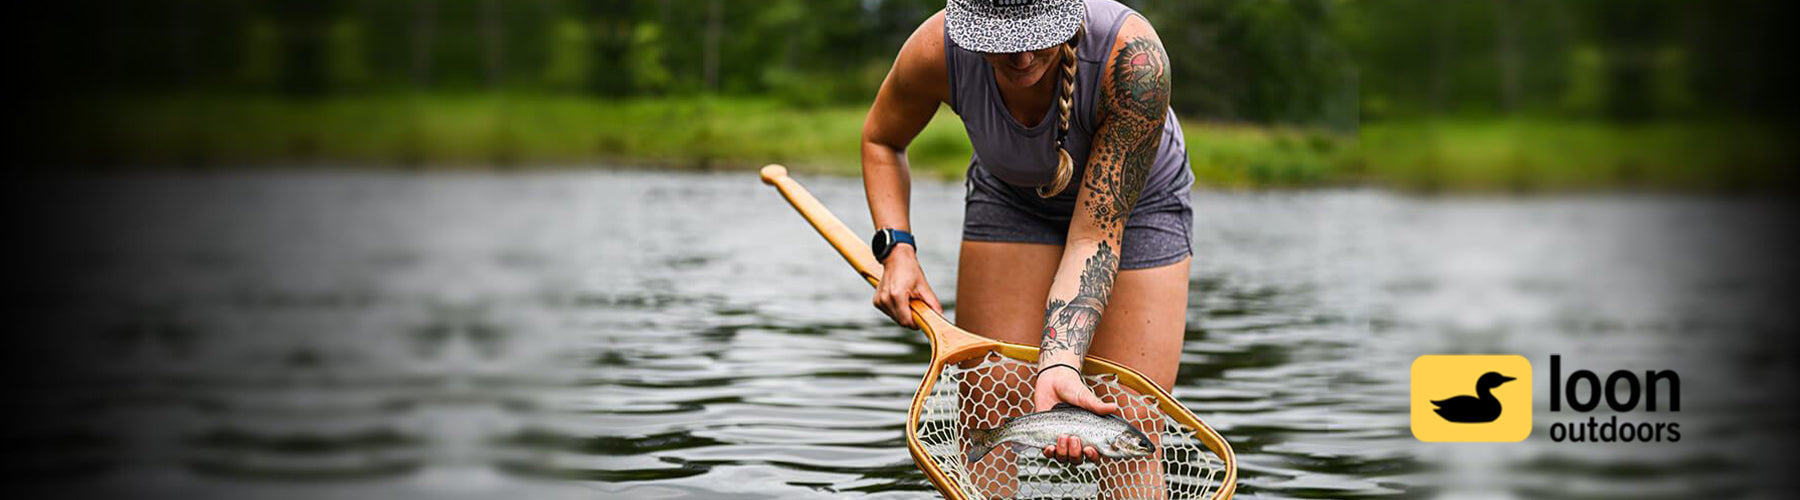 Loon Outdoors – Madison River Fishing Company